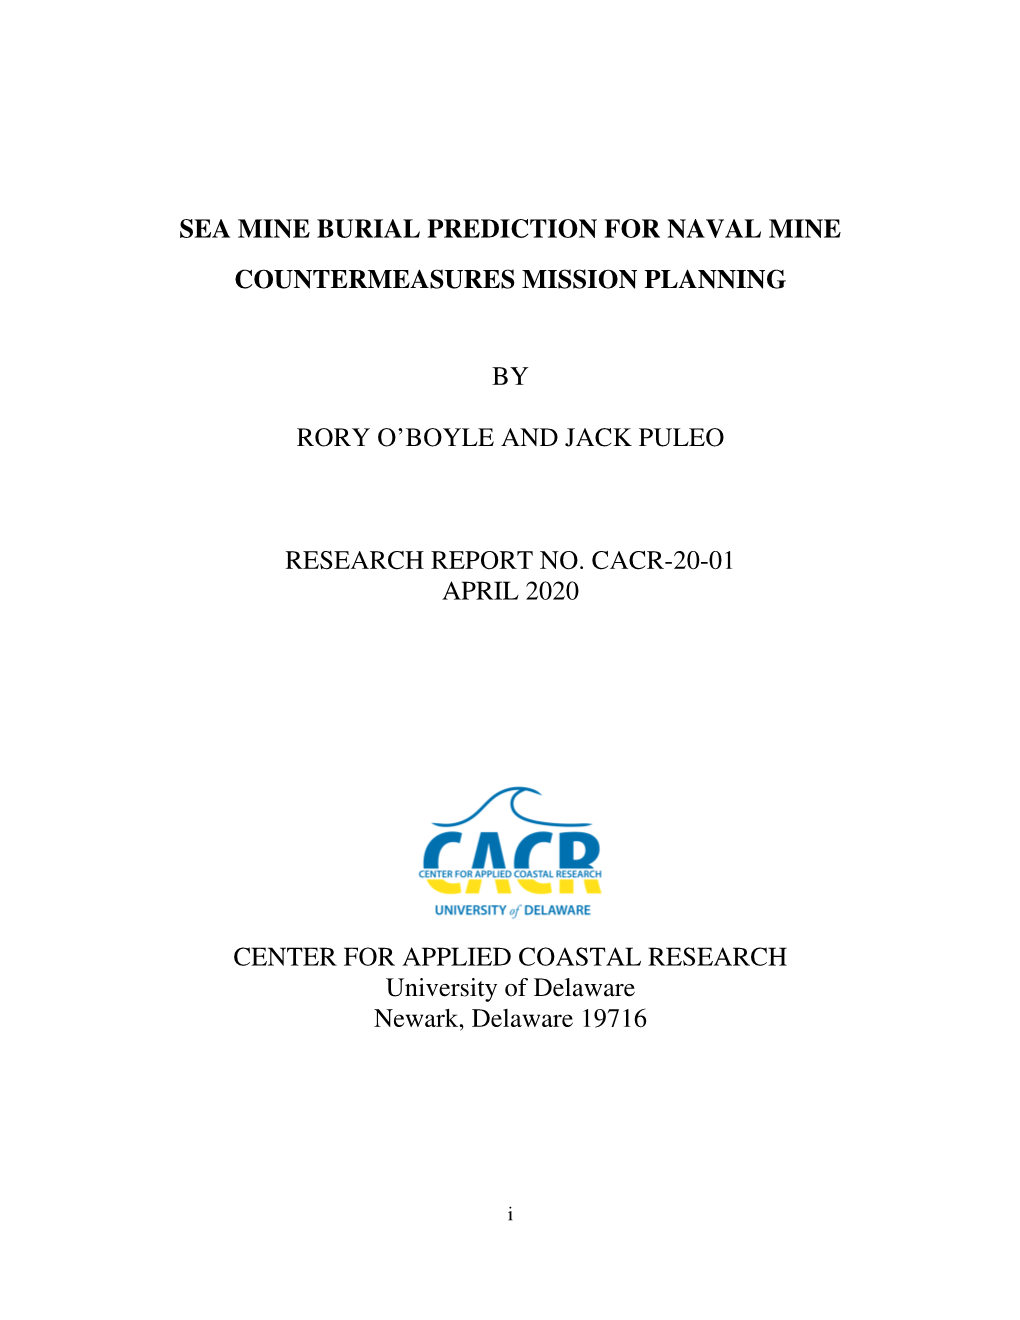 Rory O'boyle and Jack Puleo, “Sea Mine Burial Prediction for Naval Mine